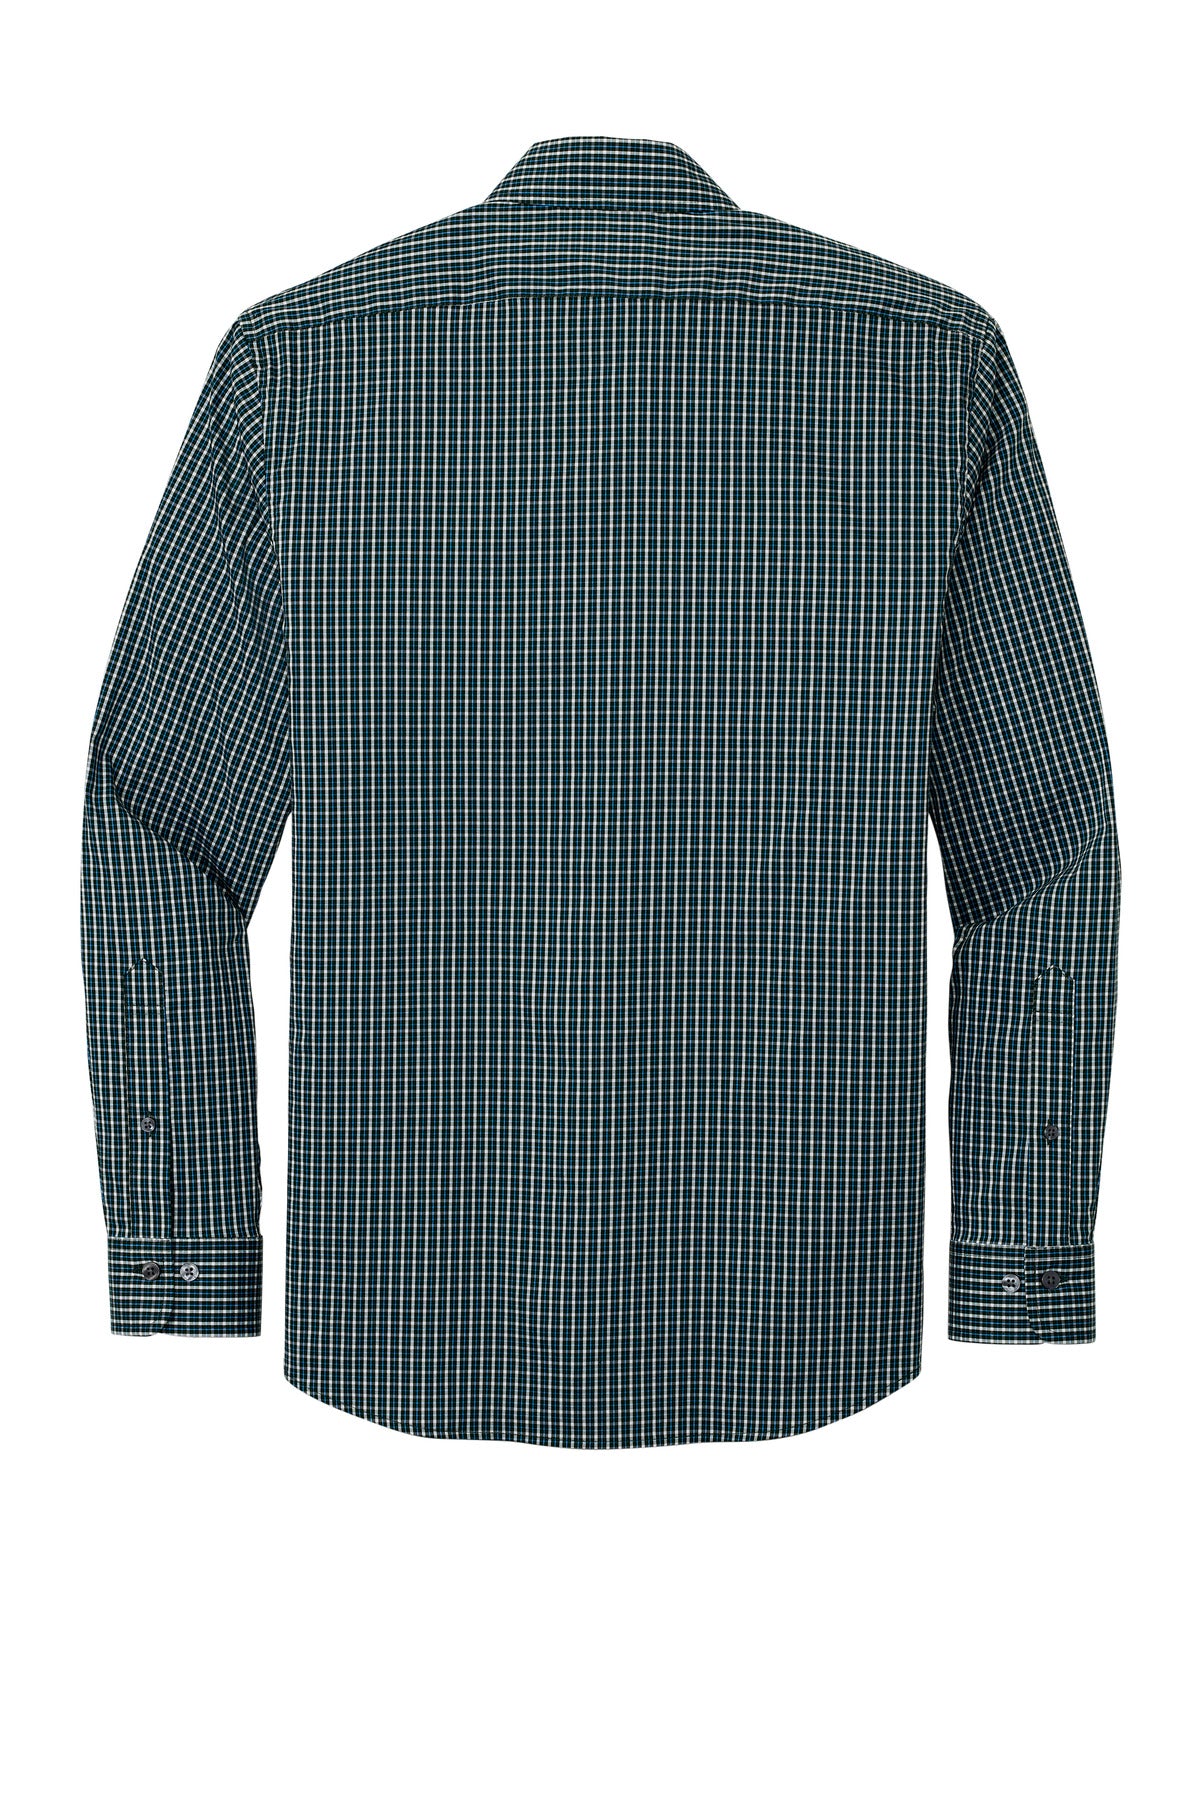 Brooks Brothers Tech Stretch Patterned Shirt BB18006